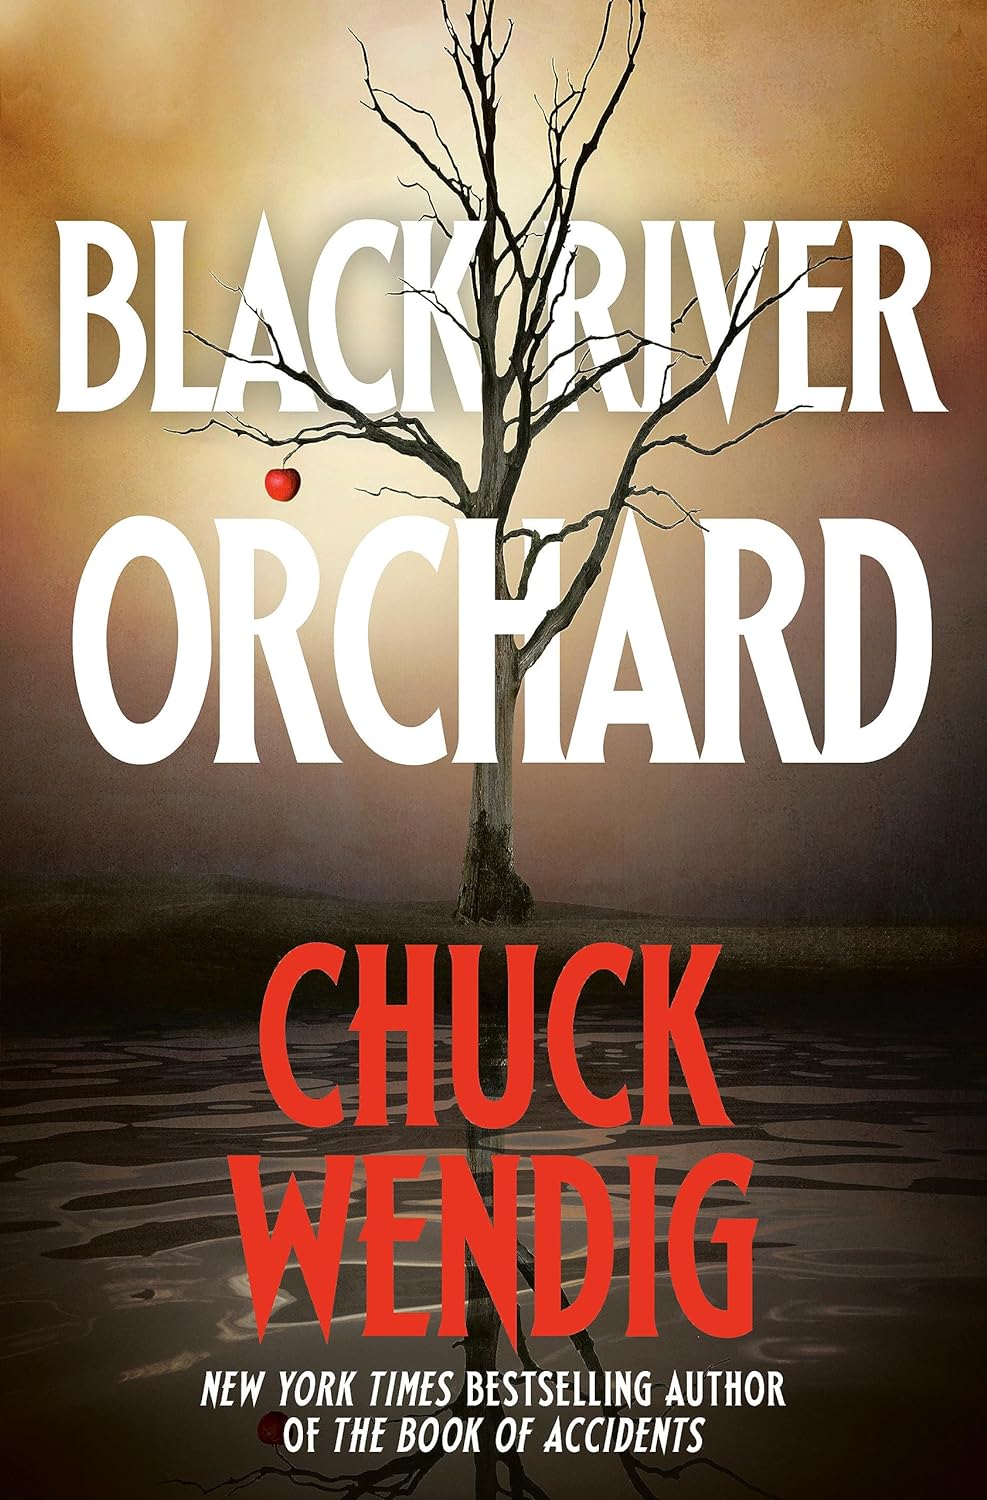 Image for "Black River Orchard"